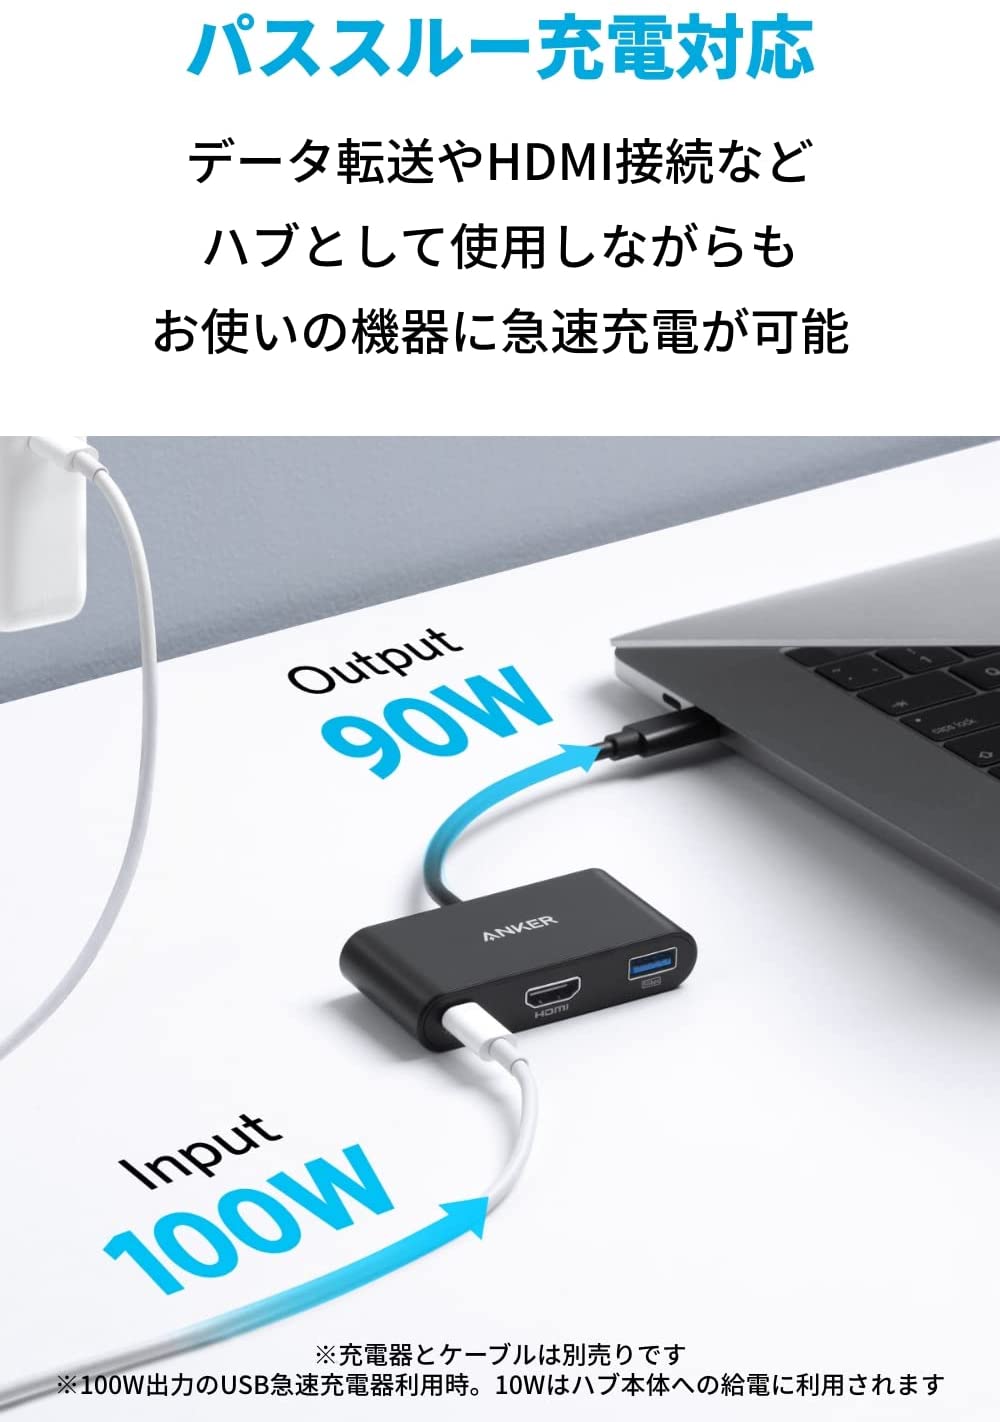 Anker PowerExpand 3 in 1 USB-C Hub